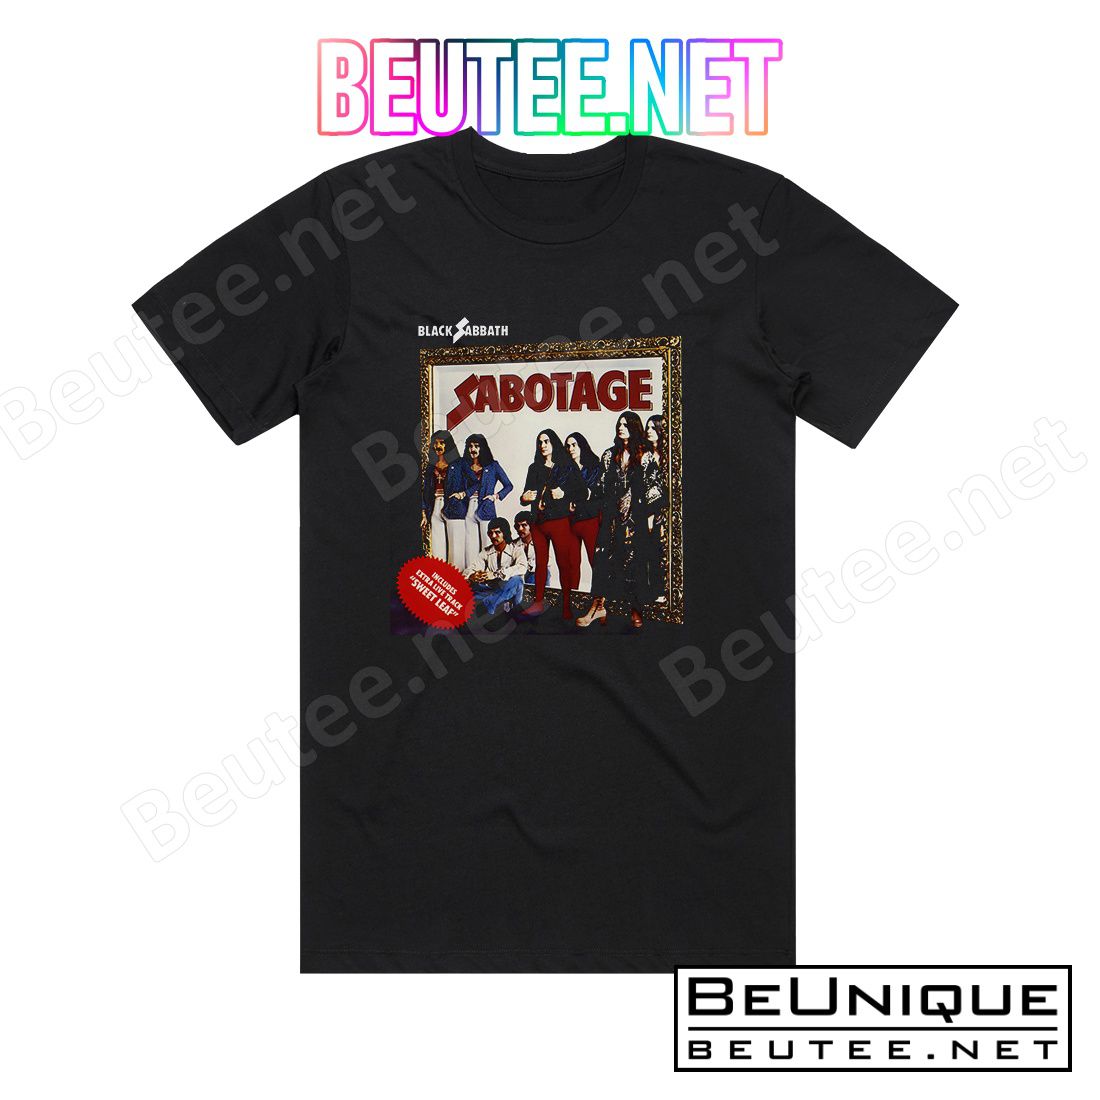 Black Sabbath Sabotage 1 Album Cover T-Shirt